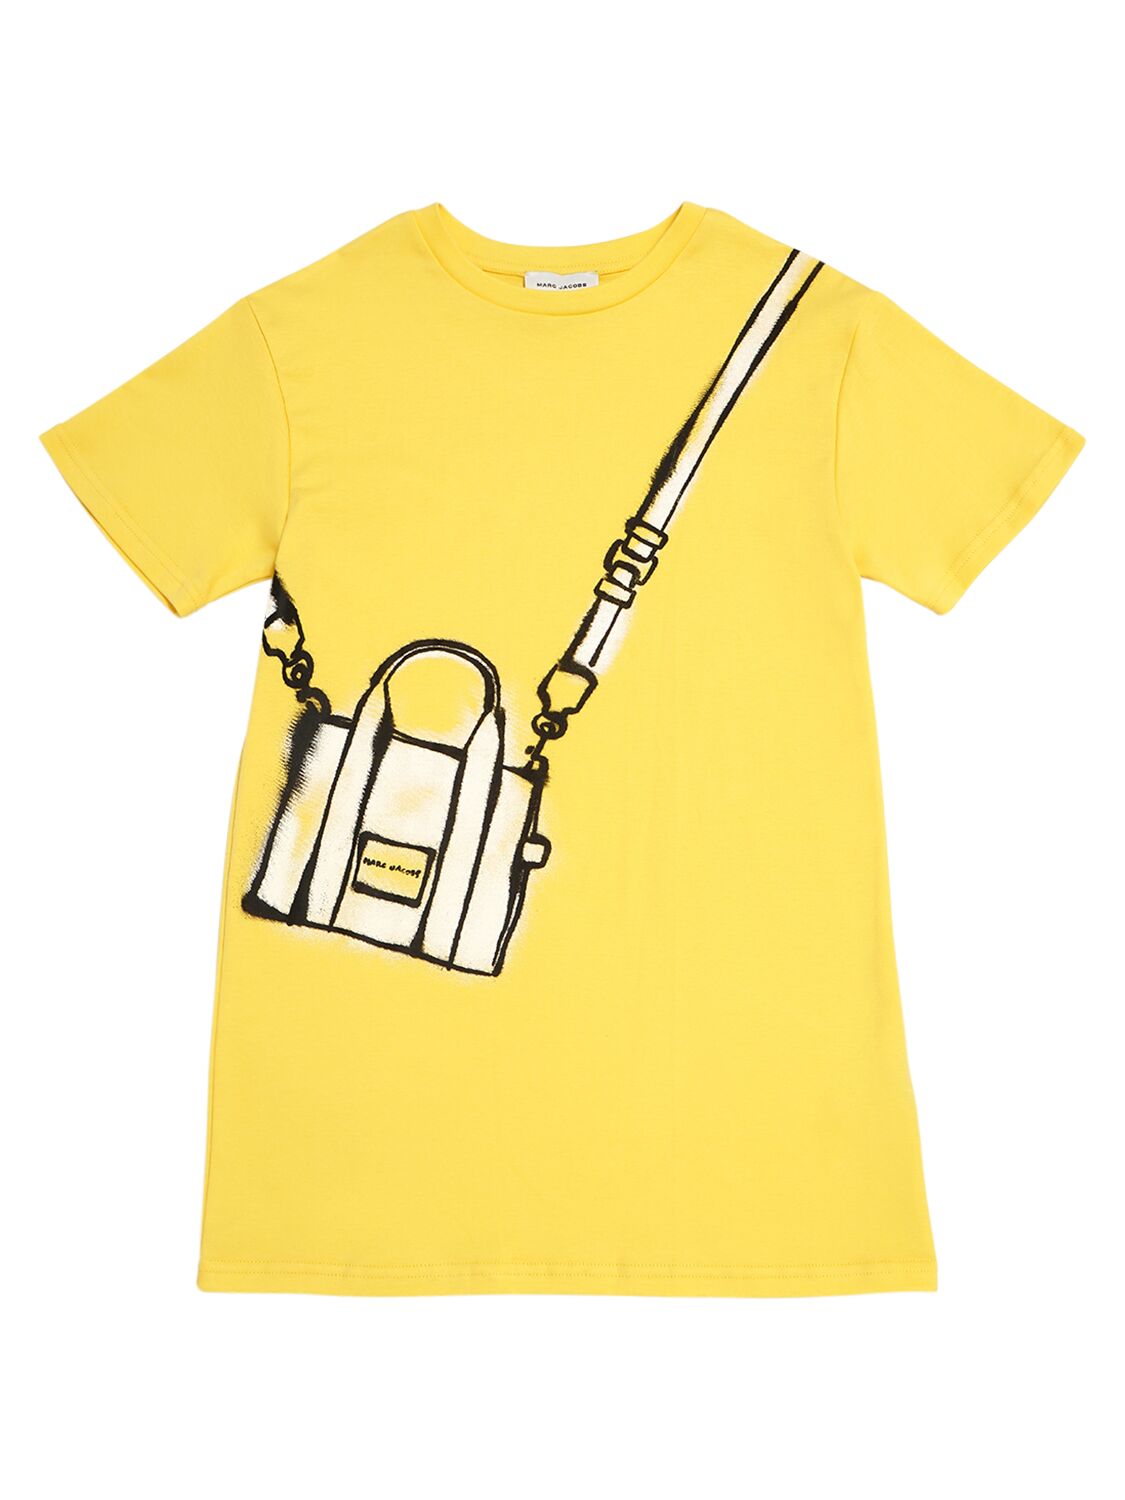 Shop Marc Jacobs Cotton Jersey Interlock Dress In Yellow